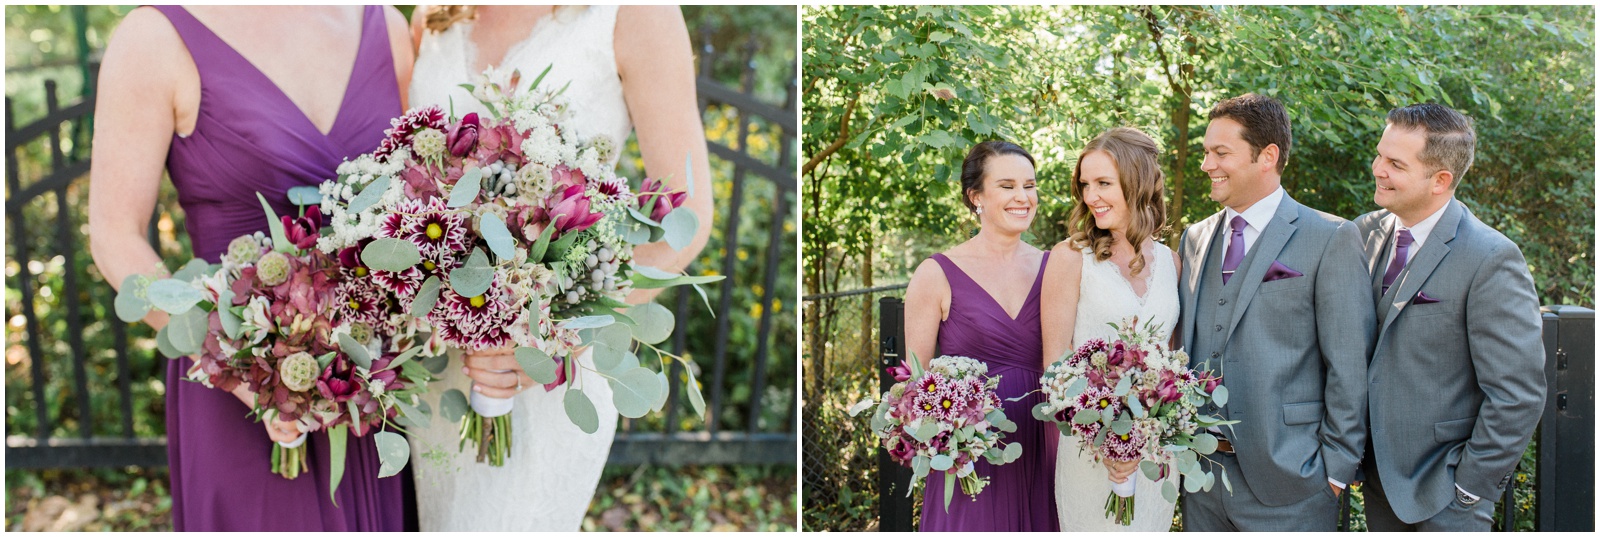 Purple and grey small wedding